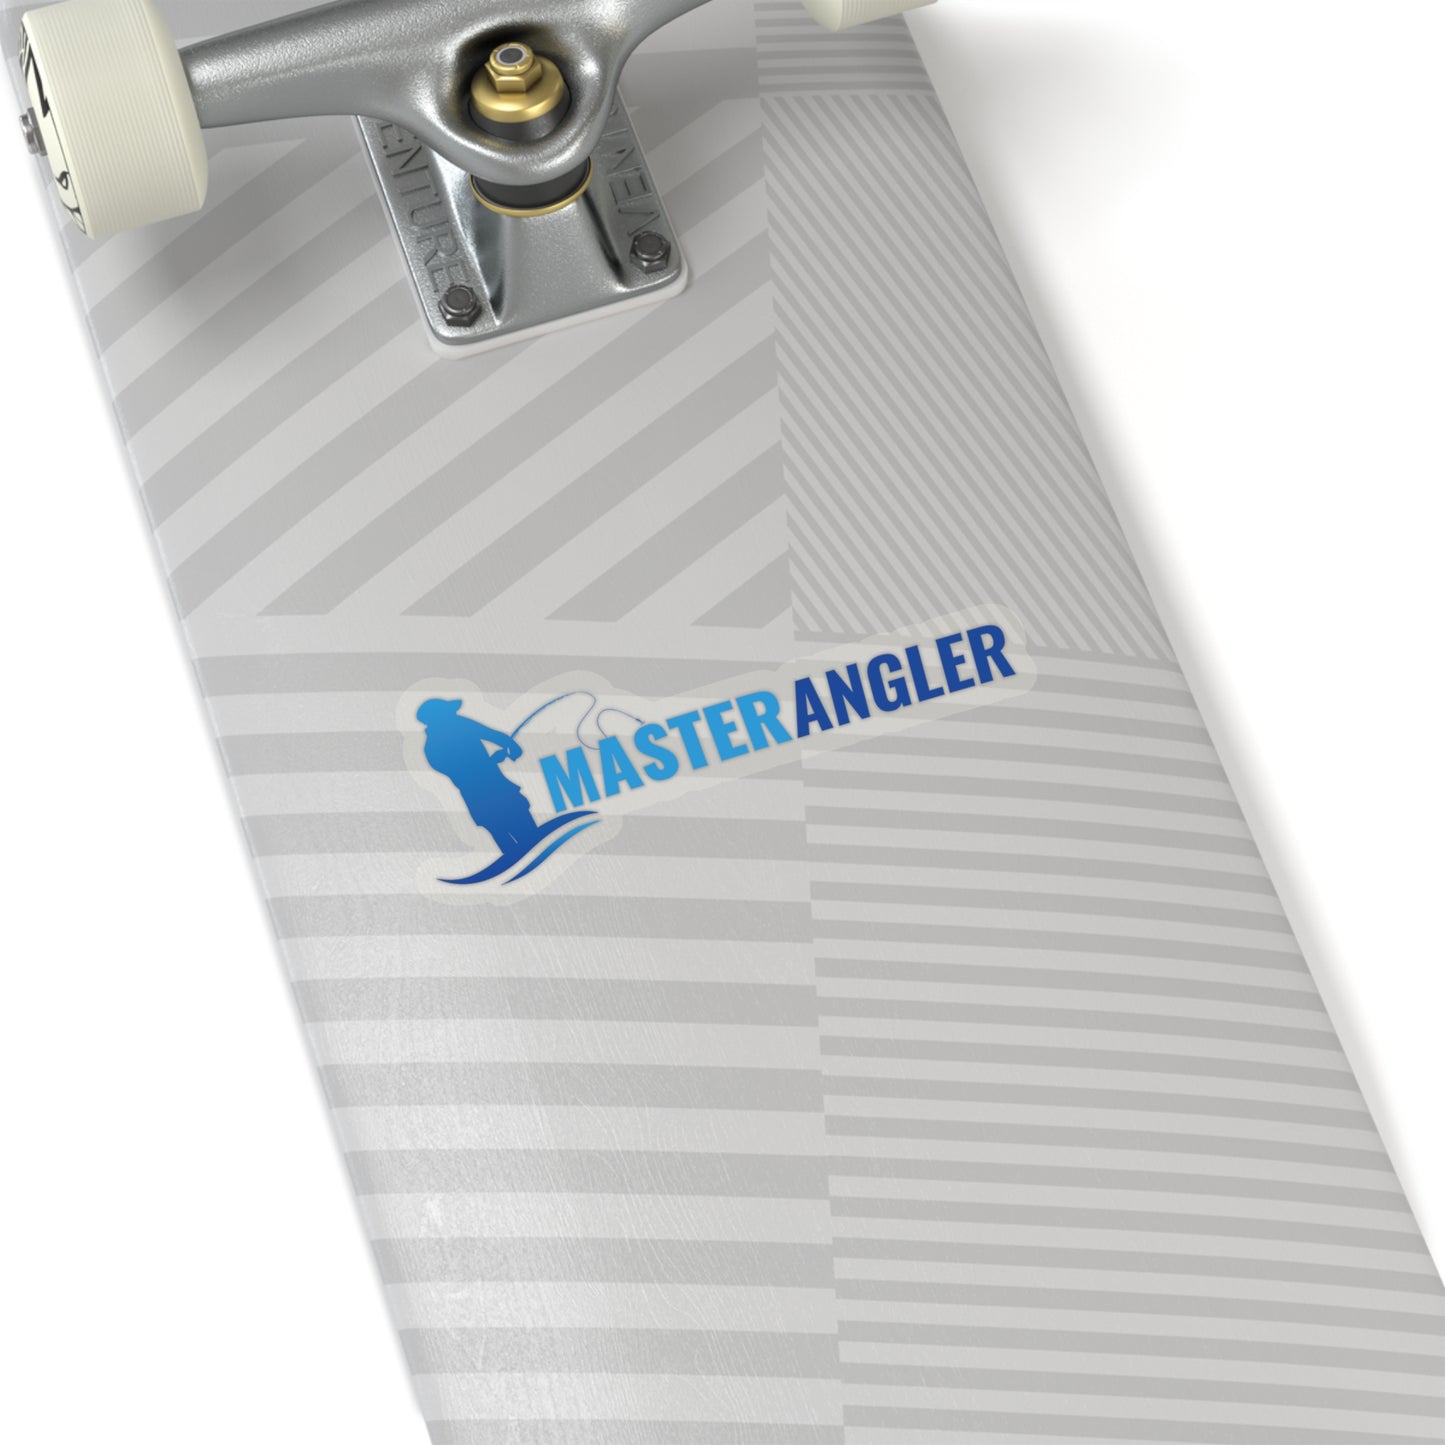 Master Angler Sticker Long - Blue